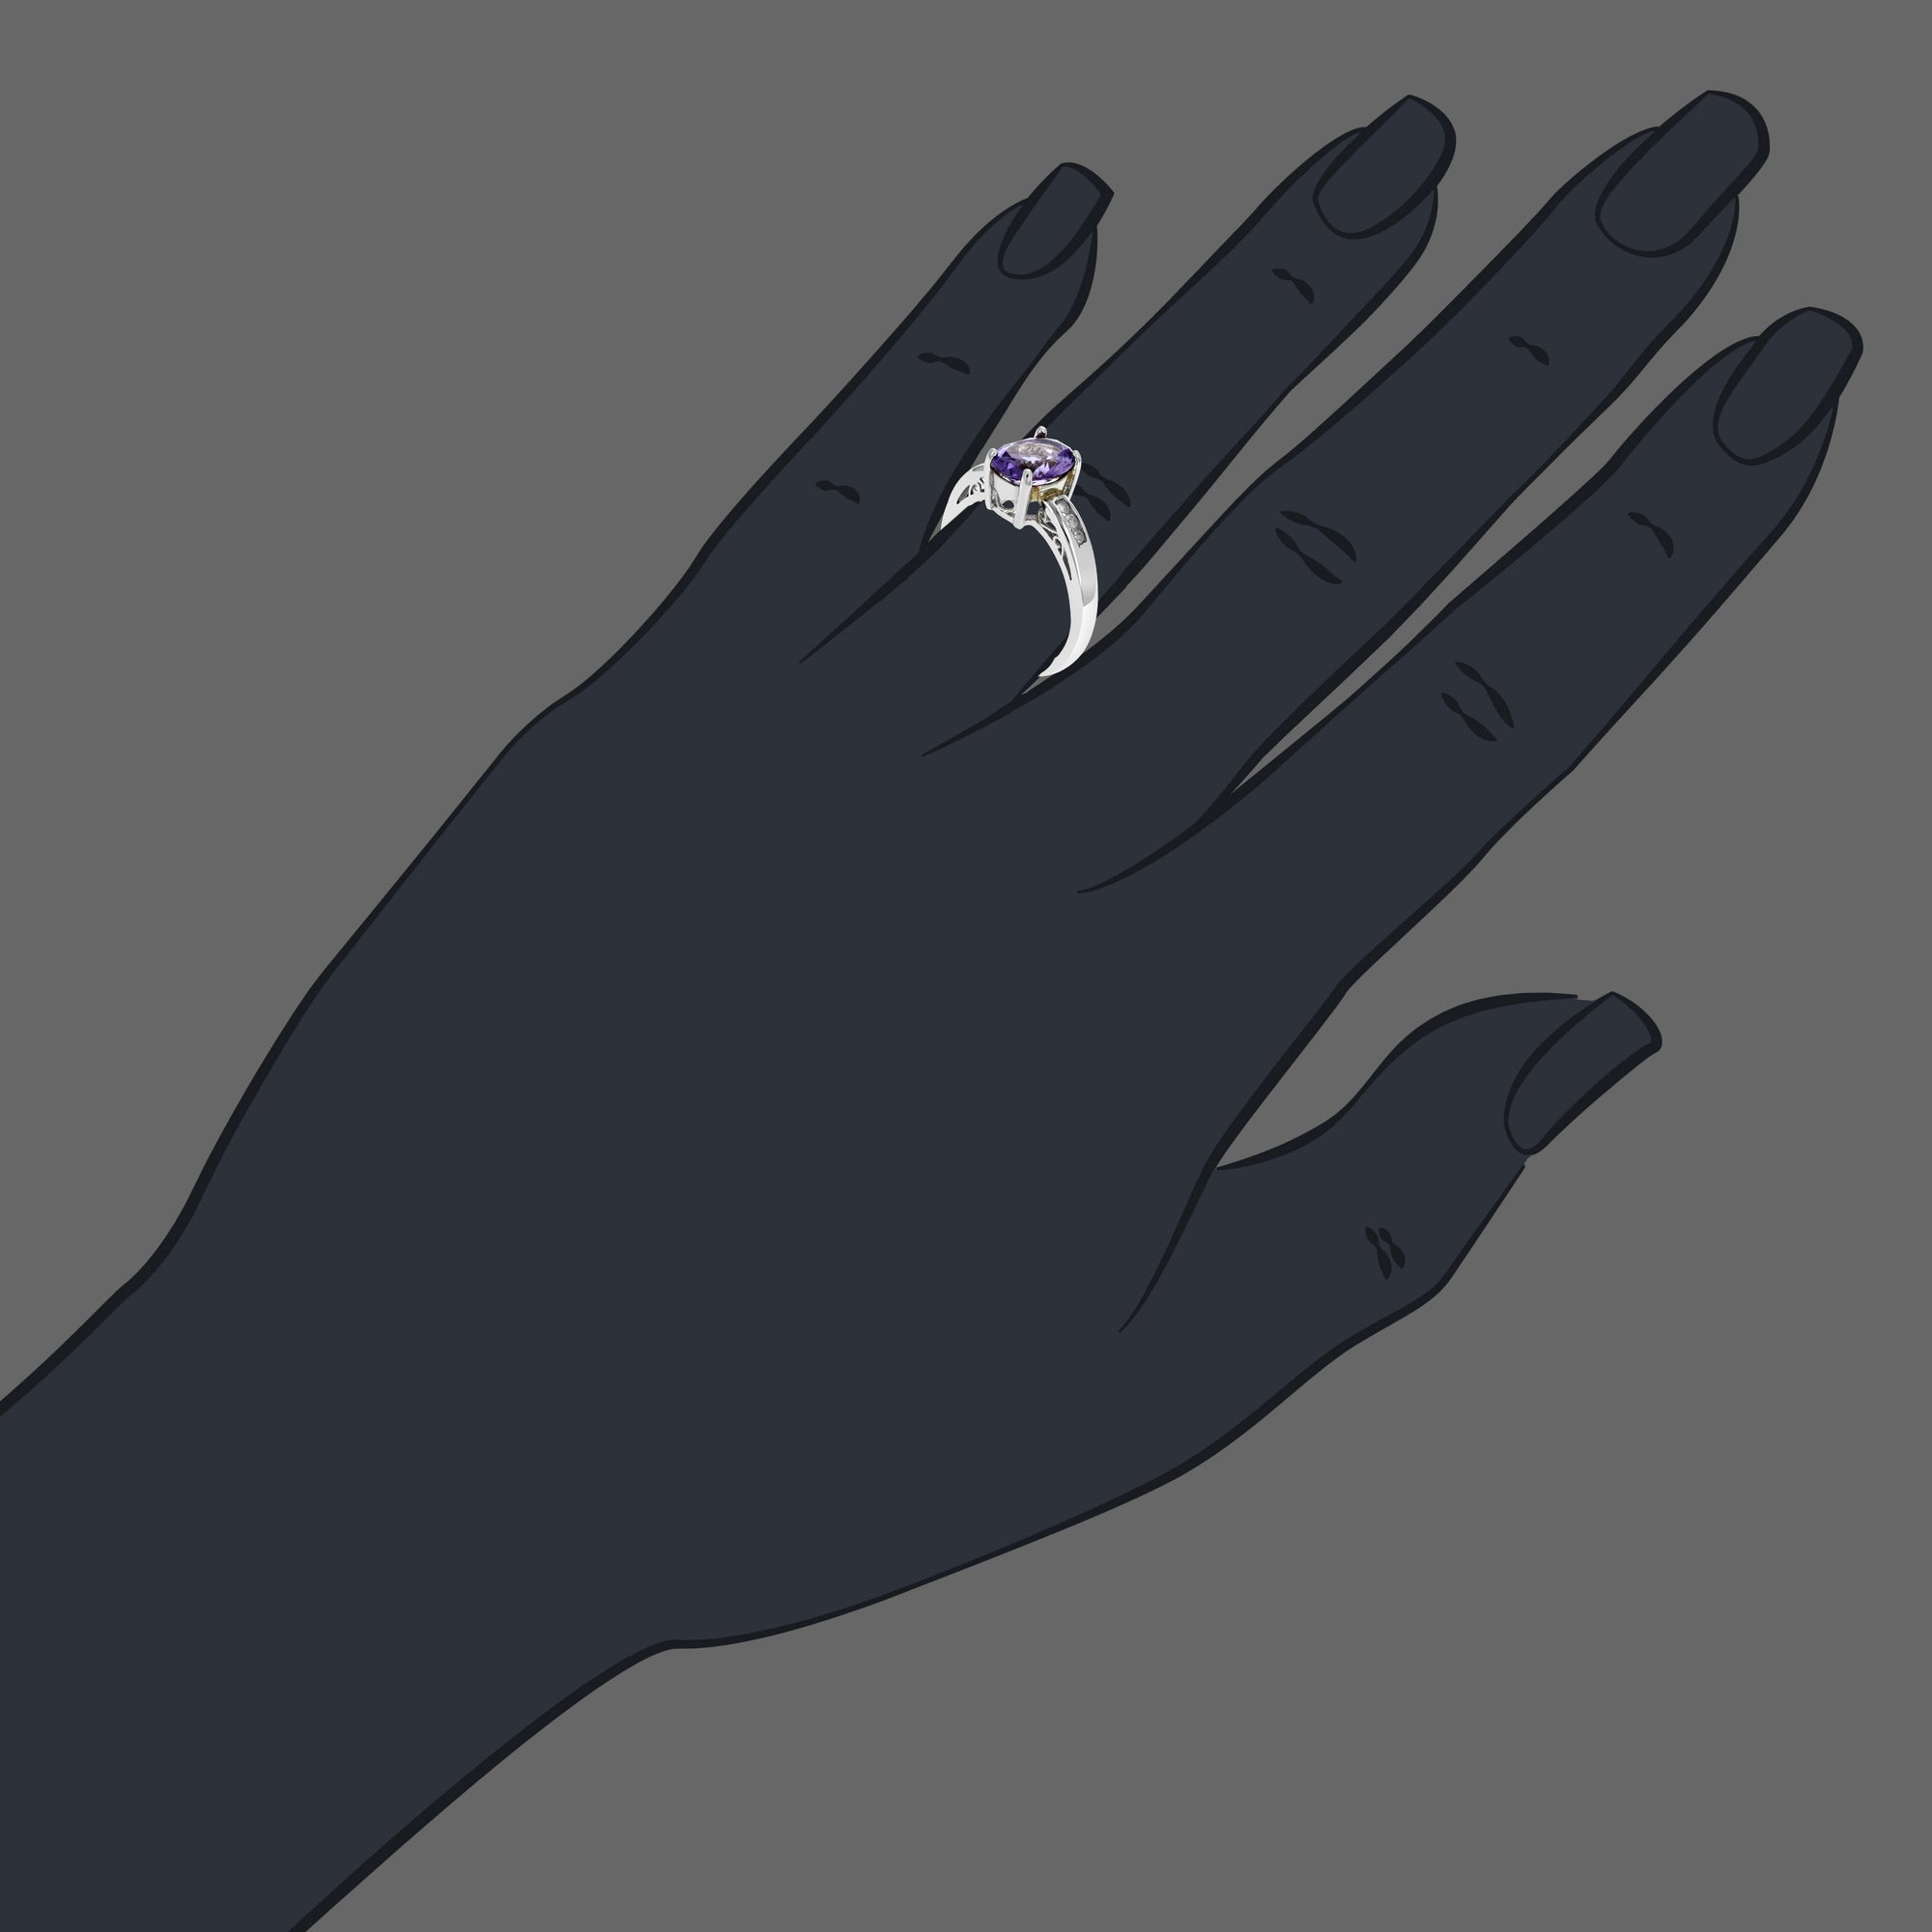 3/4 cttw 3 Stone Princess Cut Black Diamond Enagement Ring .925 Sterling Silver